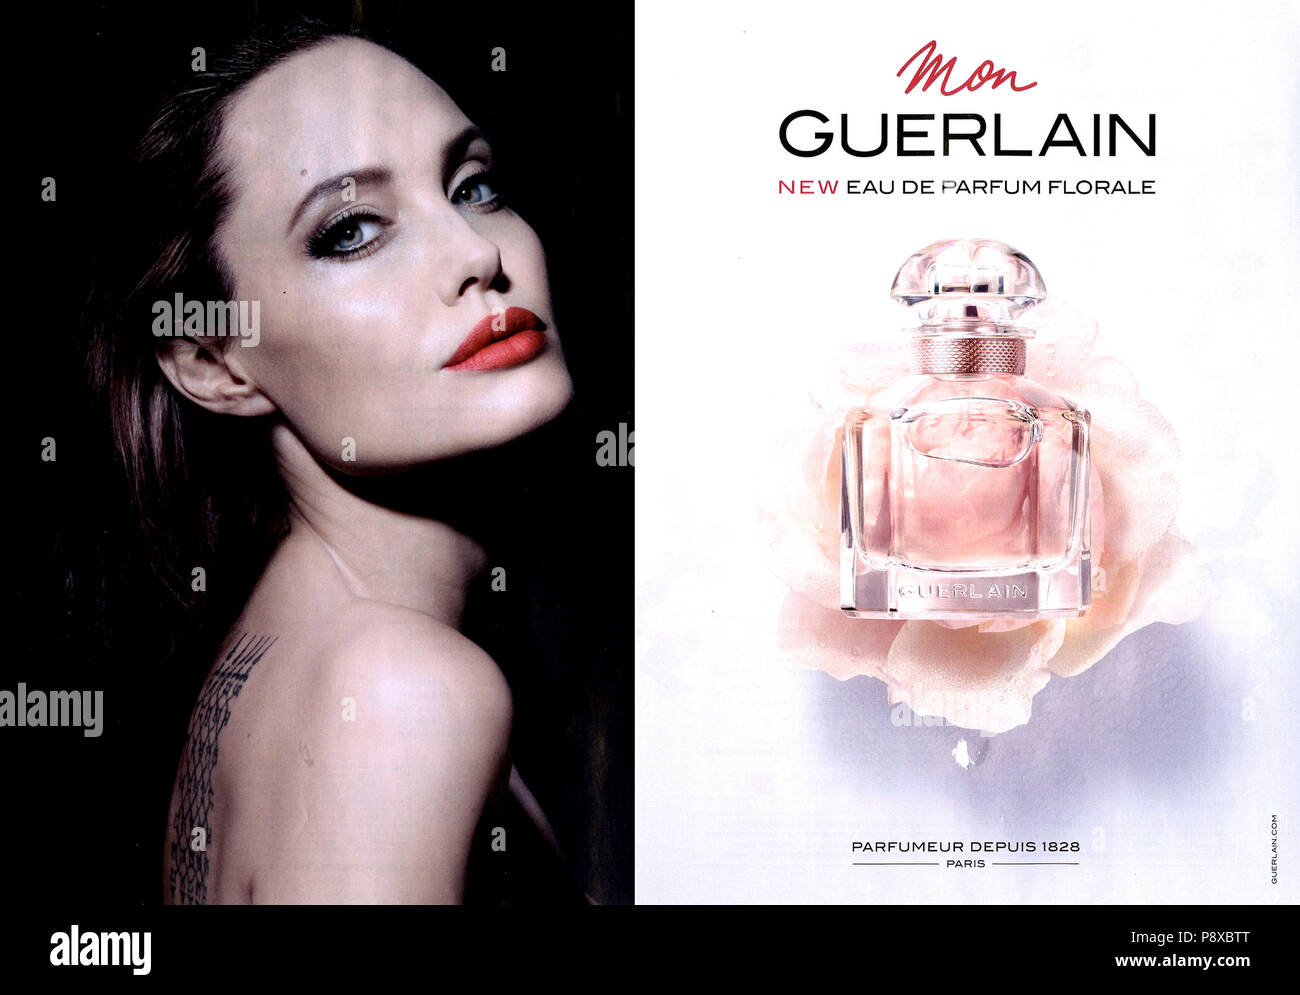 2010S UK Guerlain Magazine annuncio pubblicitario Foto stock - Alamy